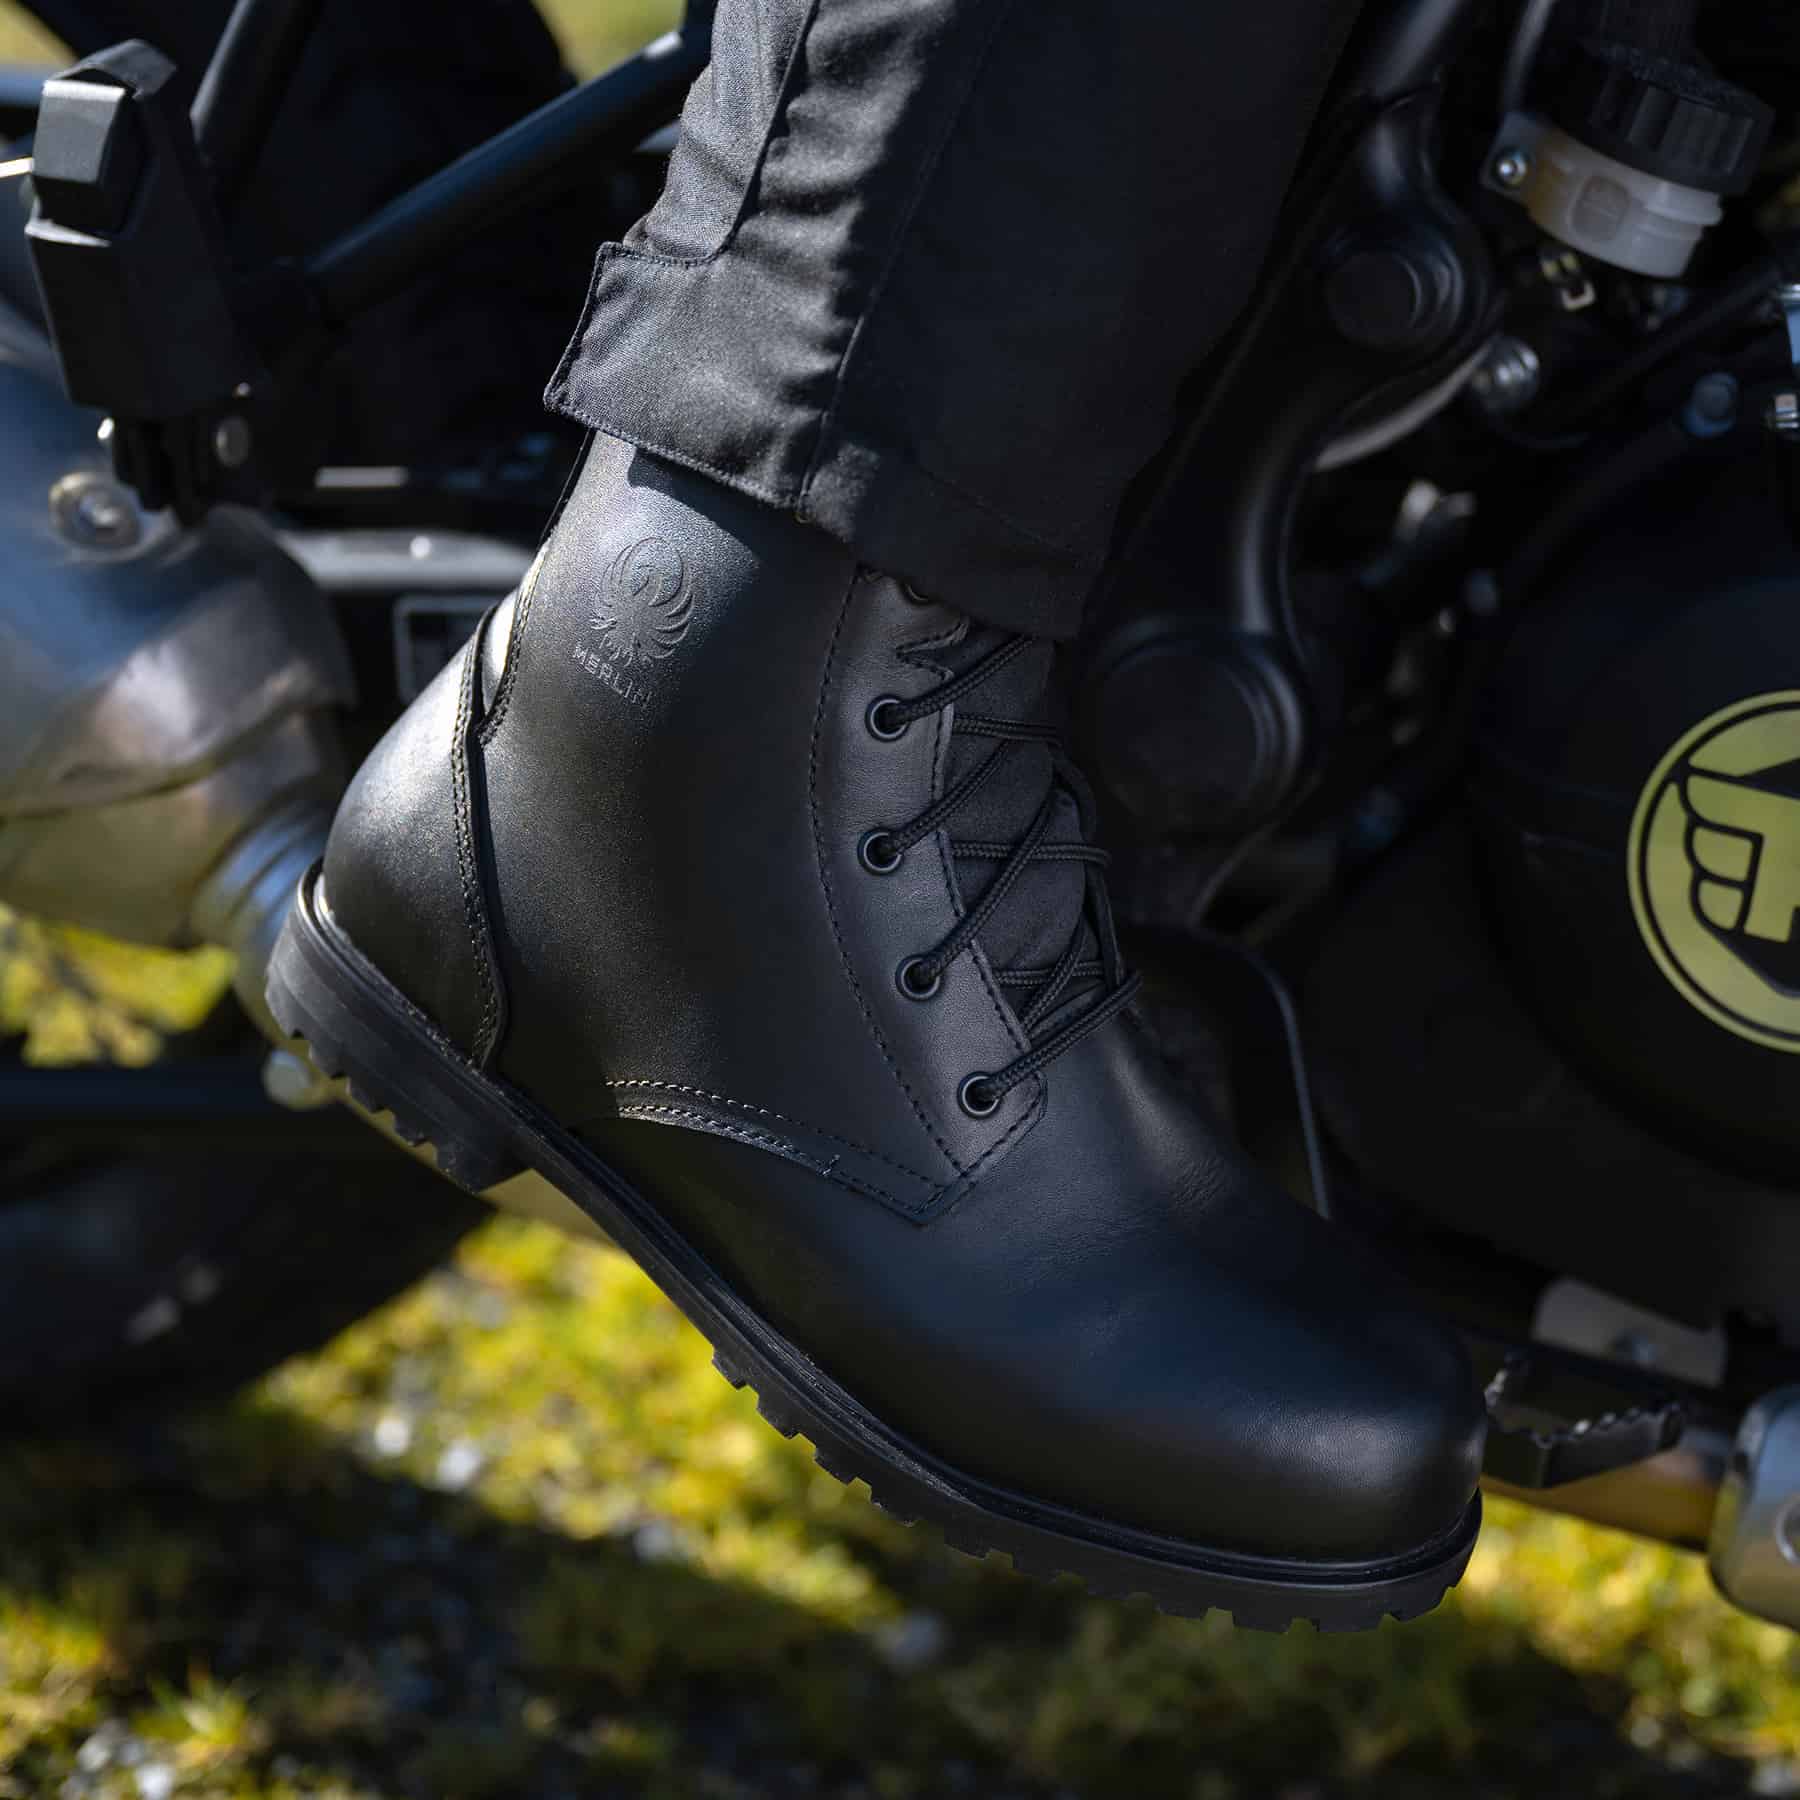 G24 Myrton Heritage Leather Motorcycle Boot - Merlin Bike Gear